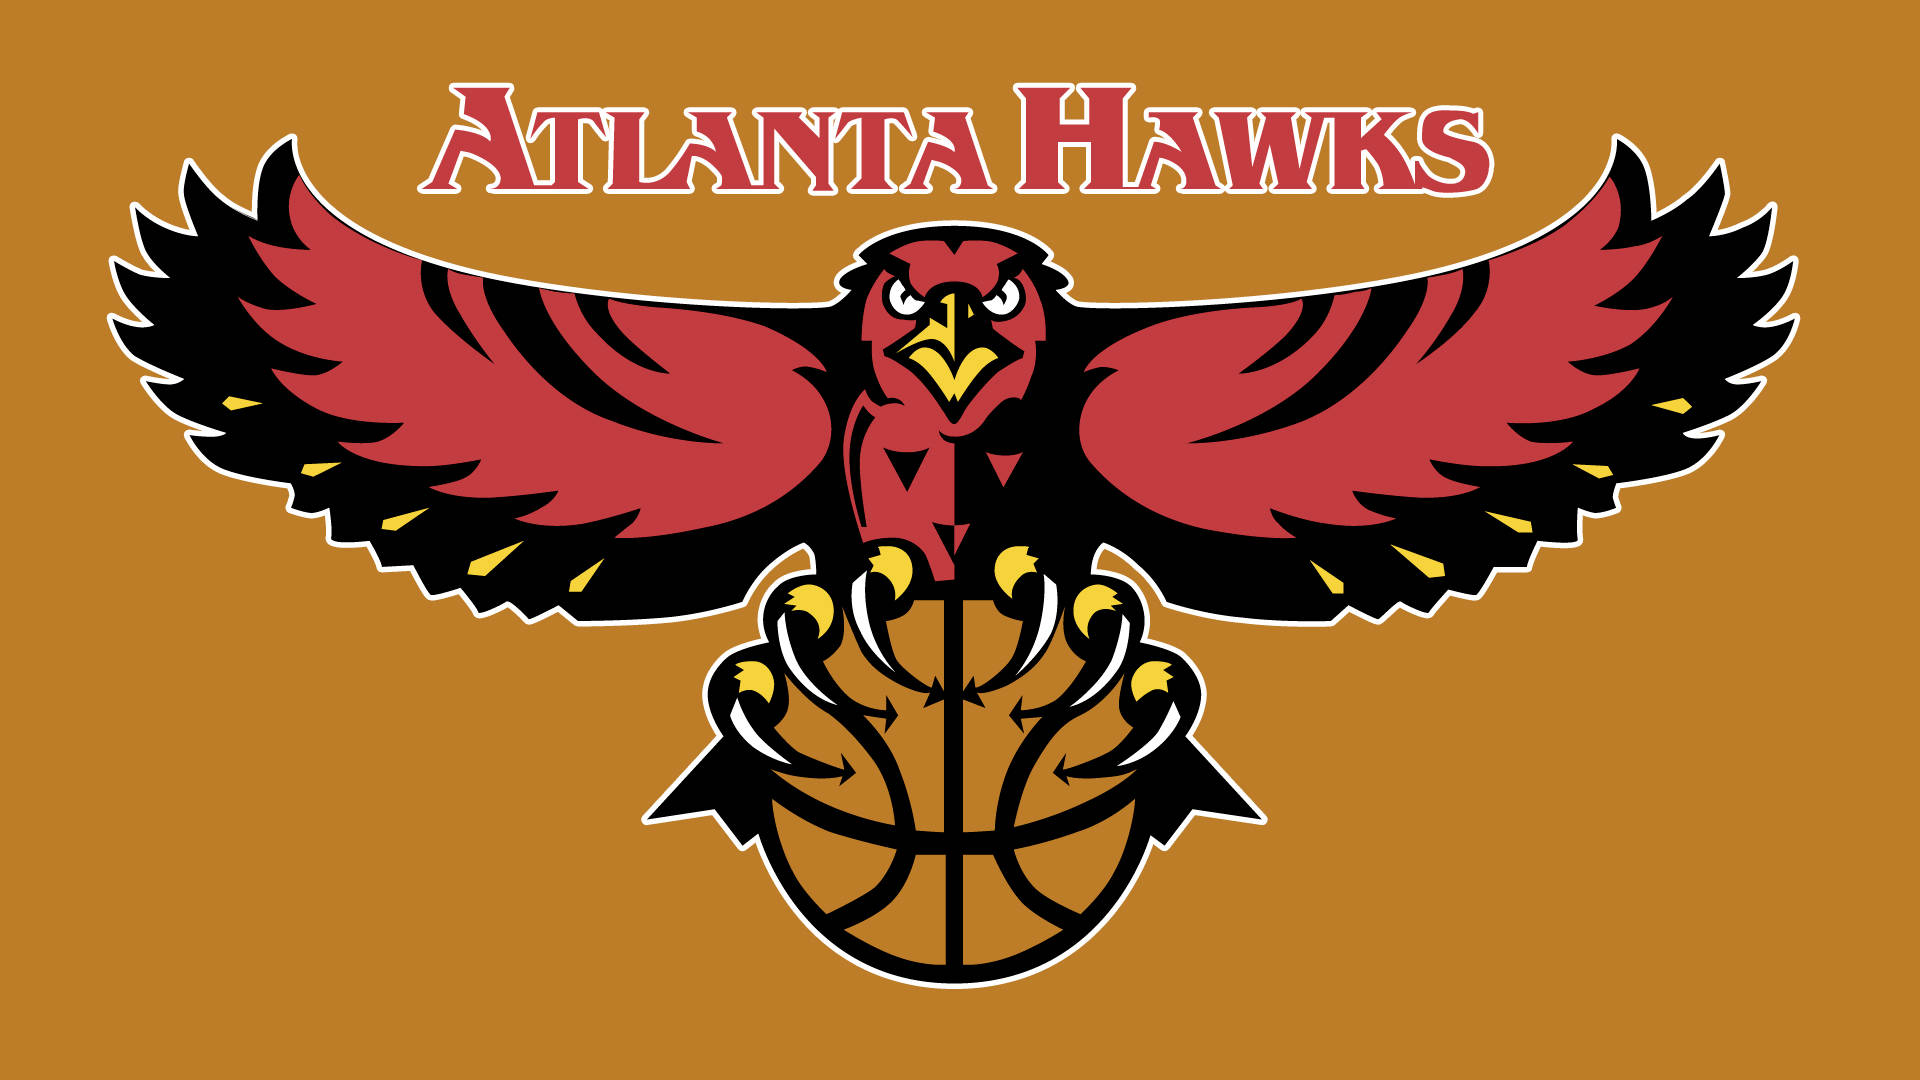 Logotipomarrom Do Atlanta Hawks. Papel de Parede